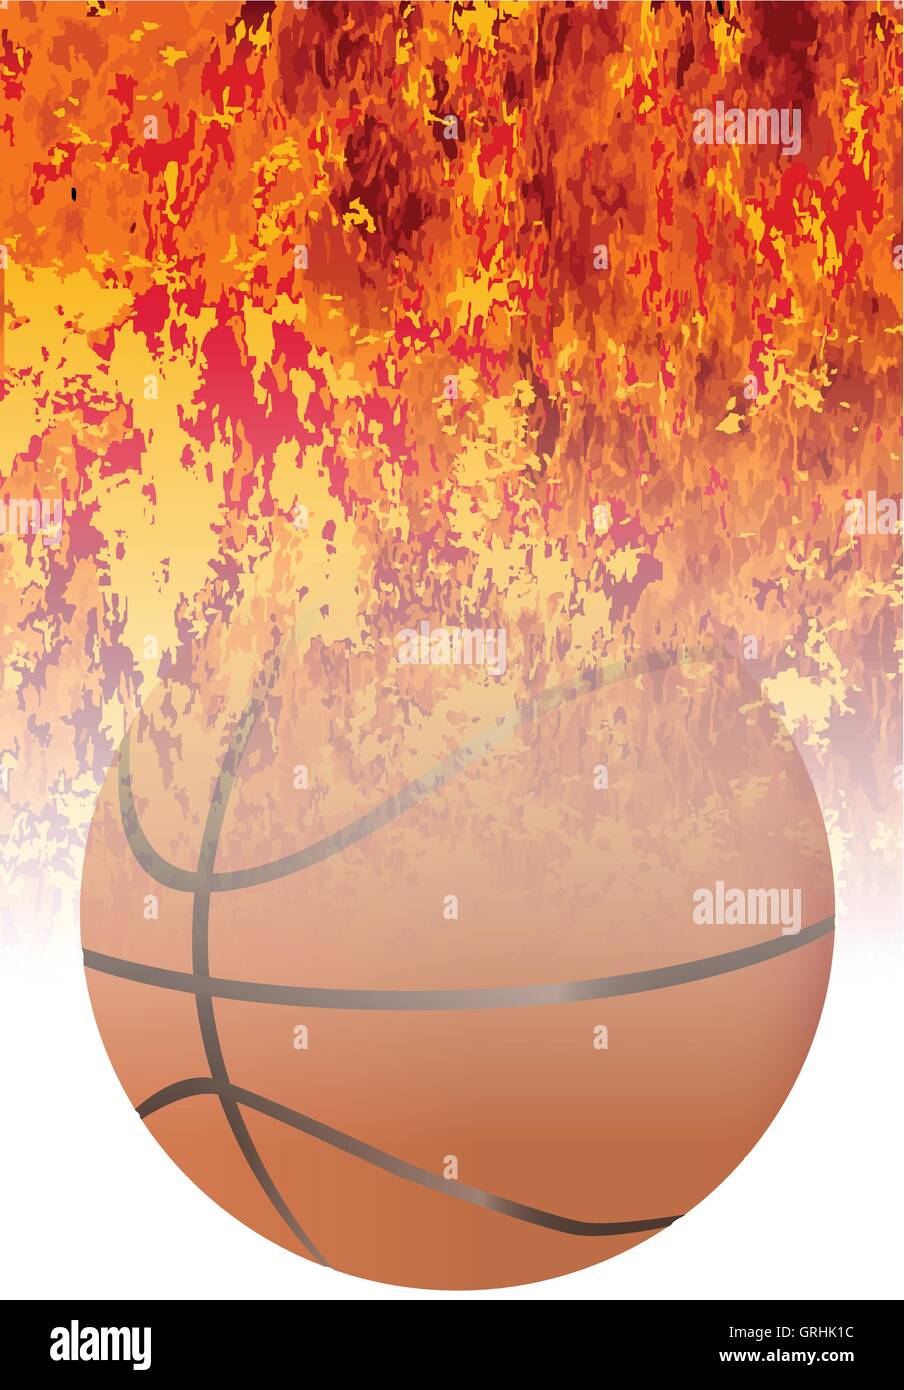 Realistic sport shirt Miami Heat, jersey template for basketball kit.  Vector illustration Stock Vector Image & Art - Alamy